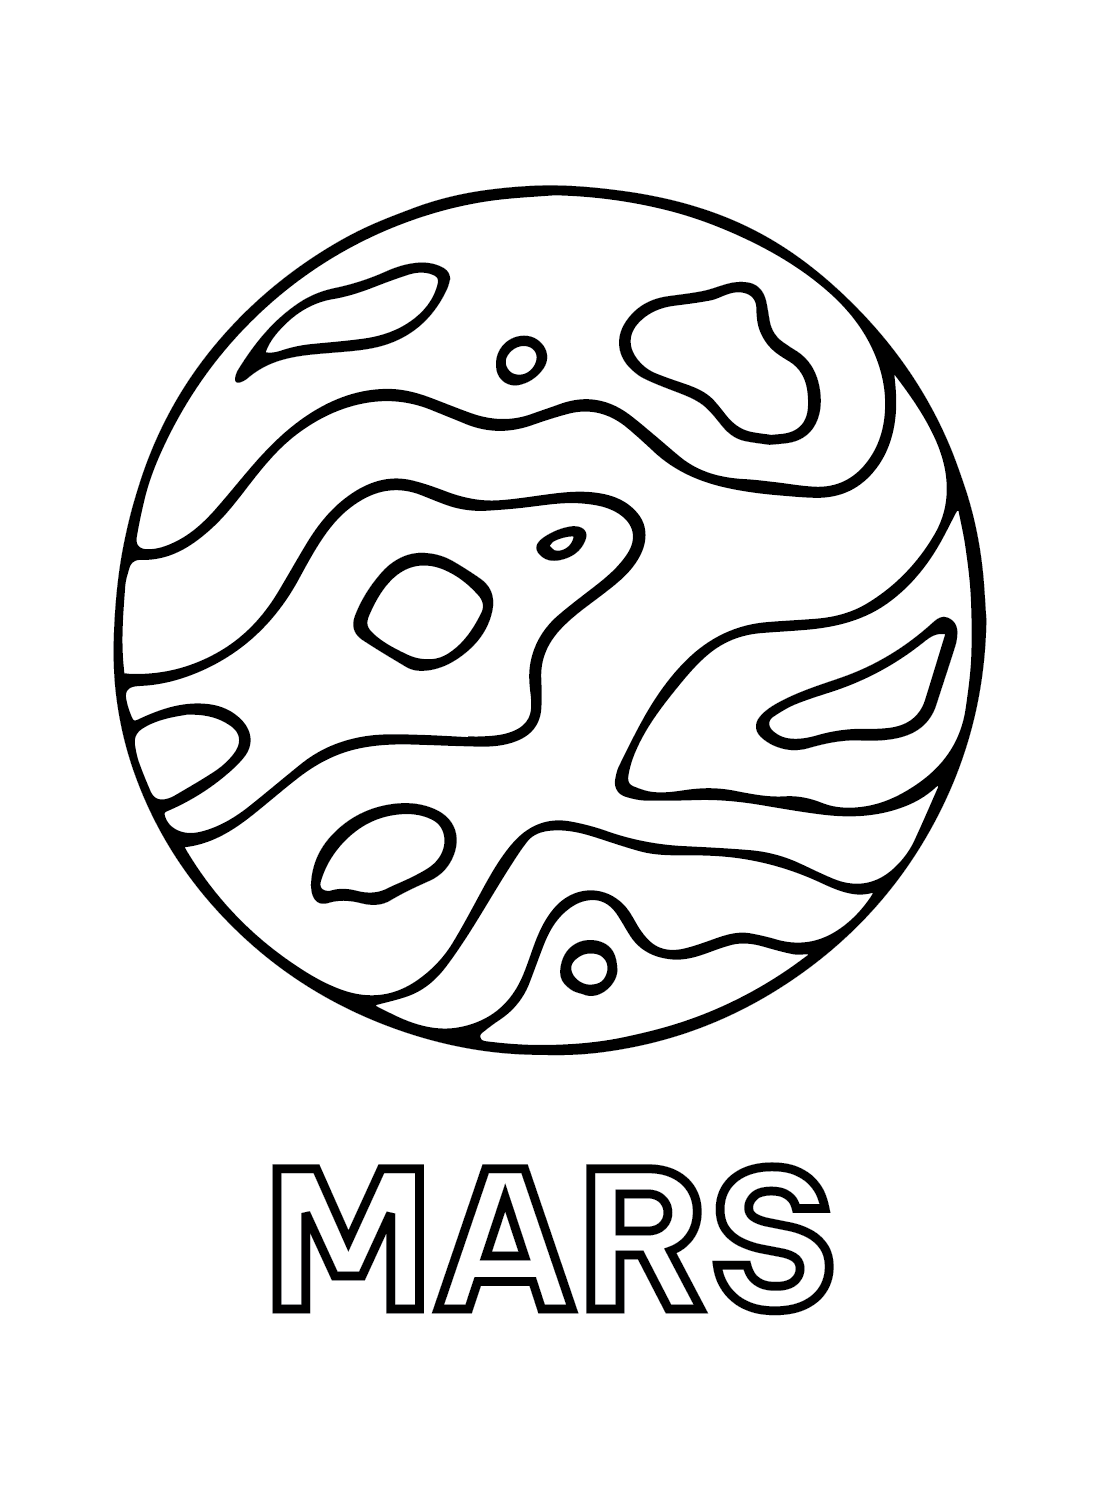 Stampa Marte da Marte